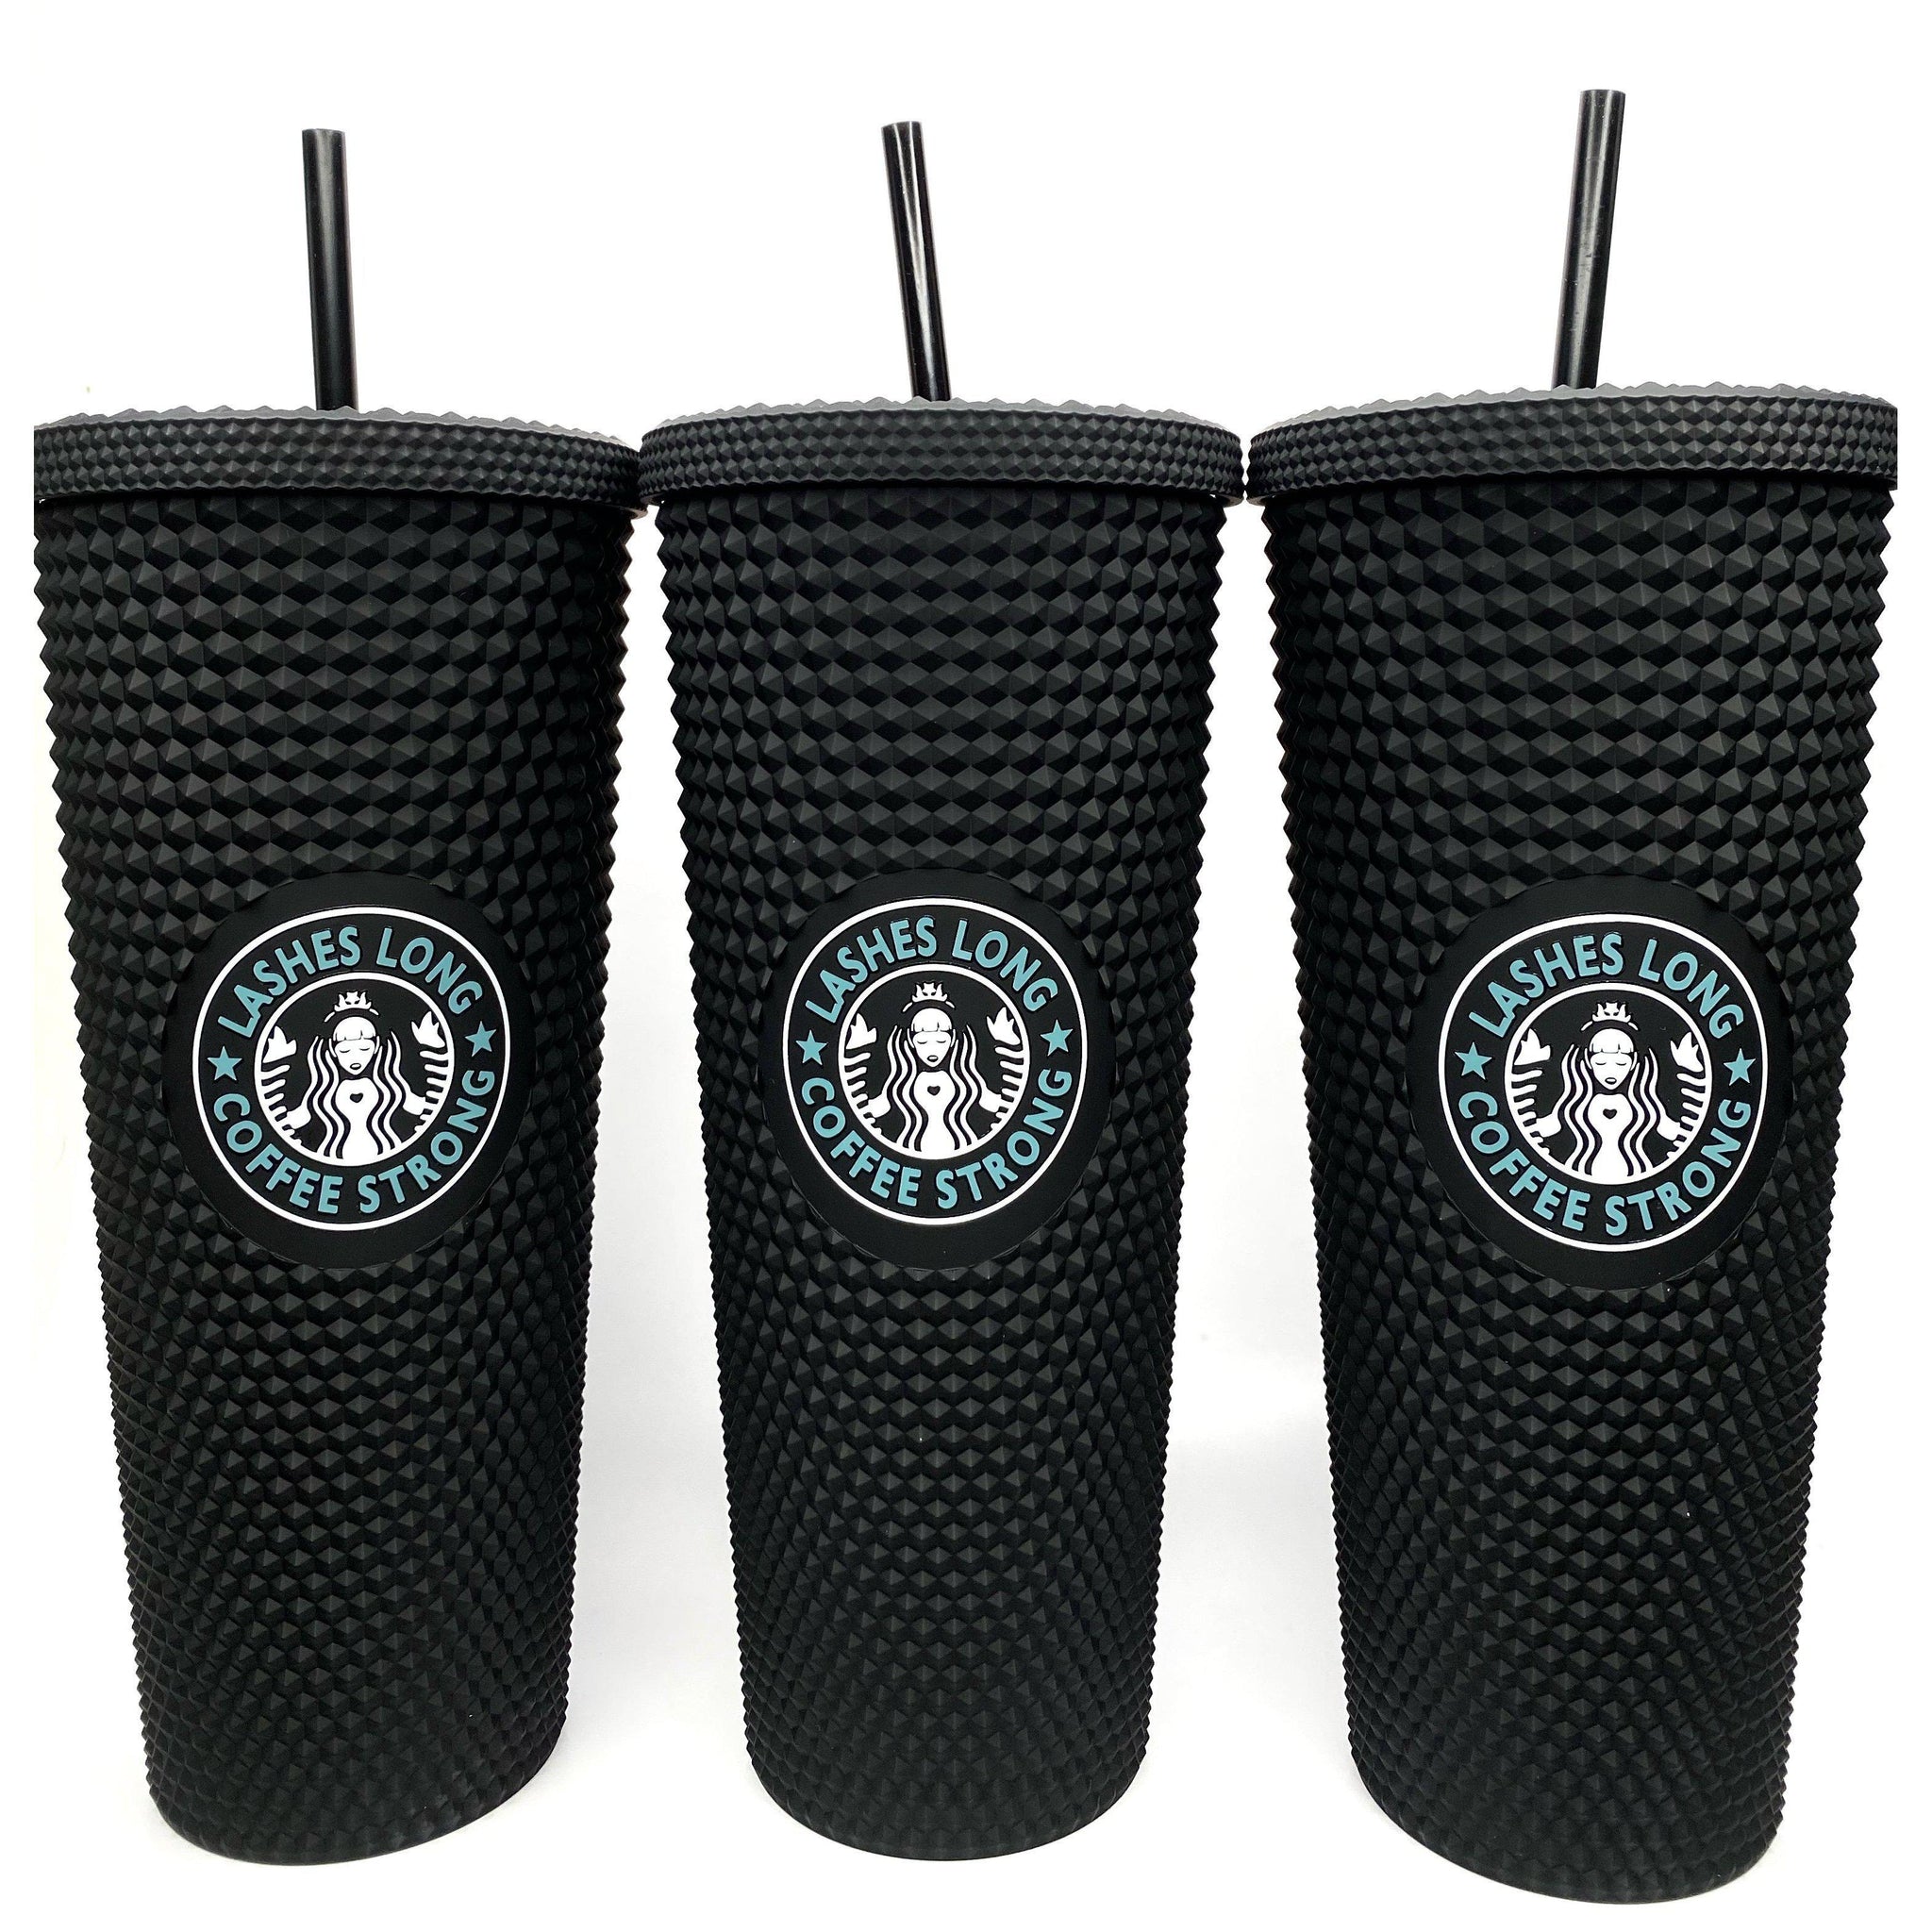 Starbucks Matte Black Hot Travel Mug Limited Edition 12 fl oz